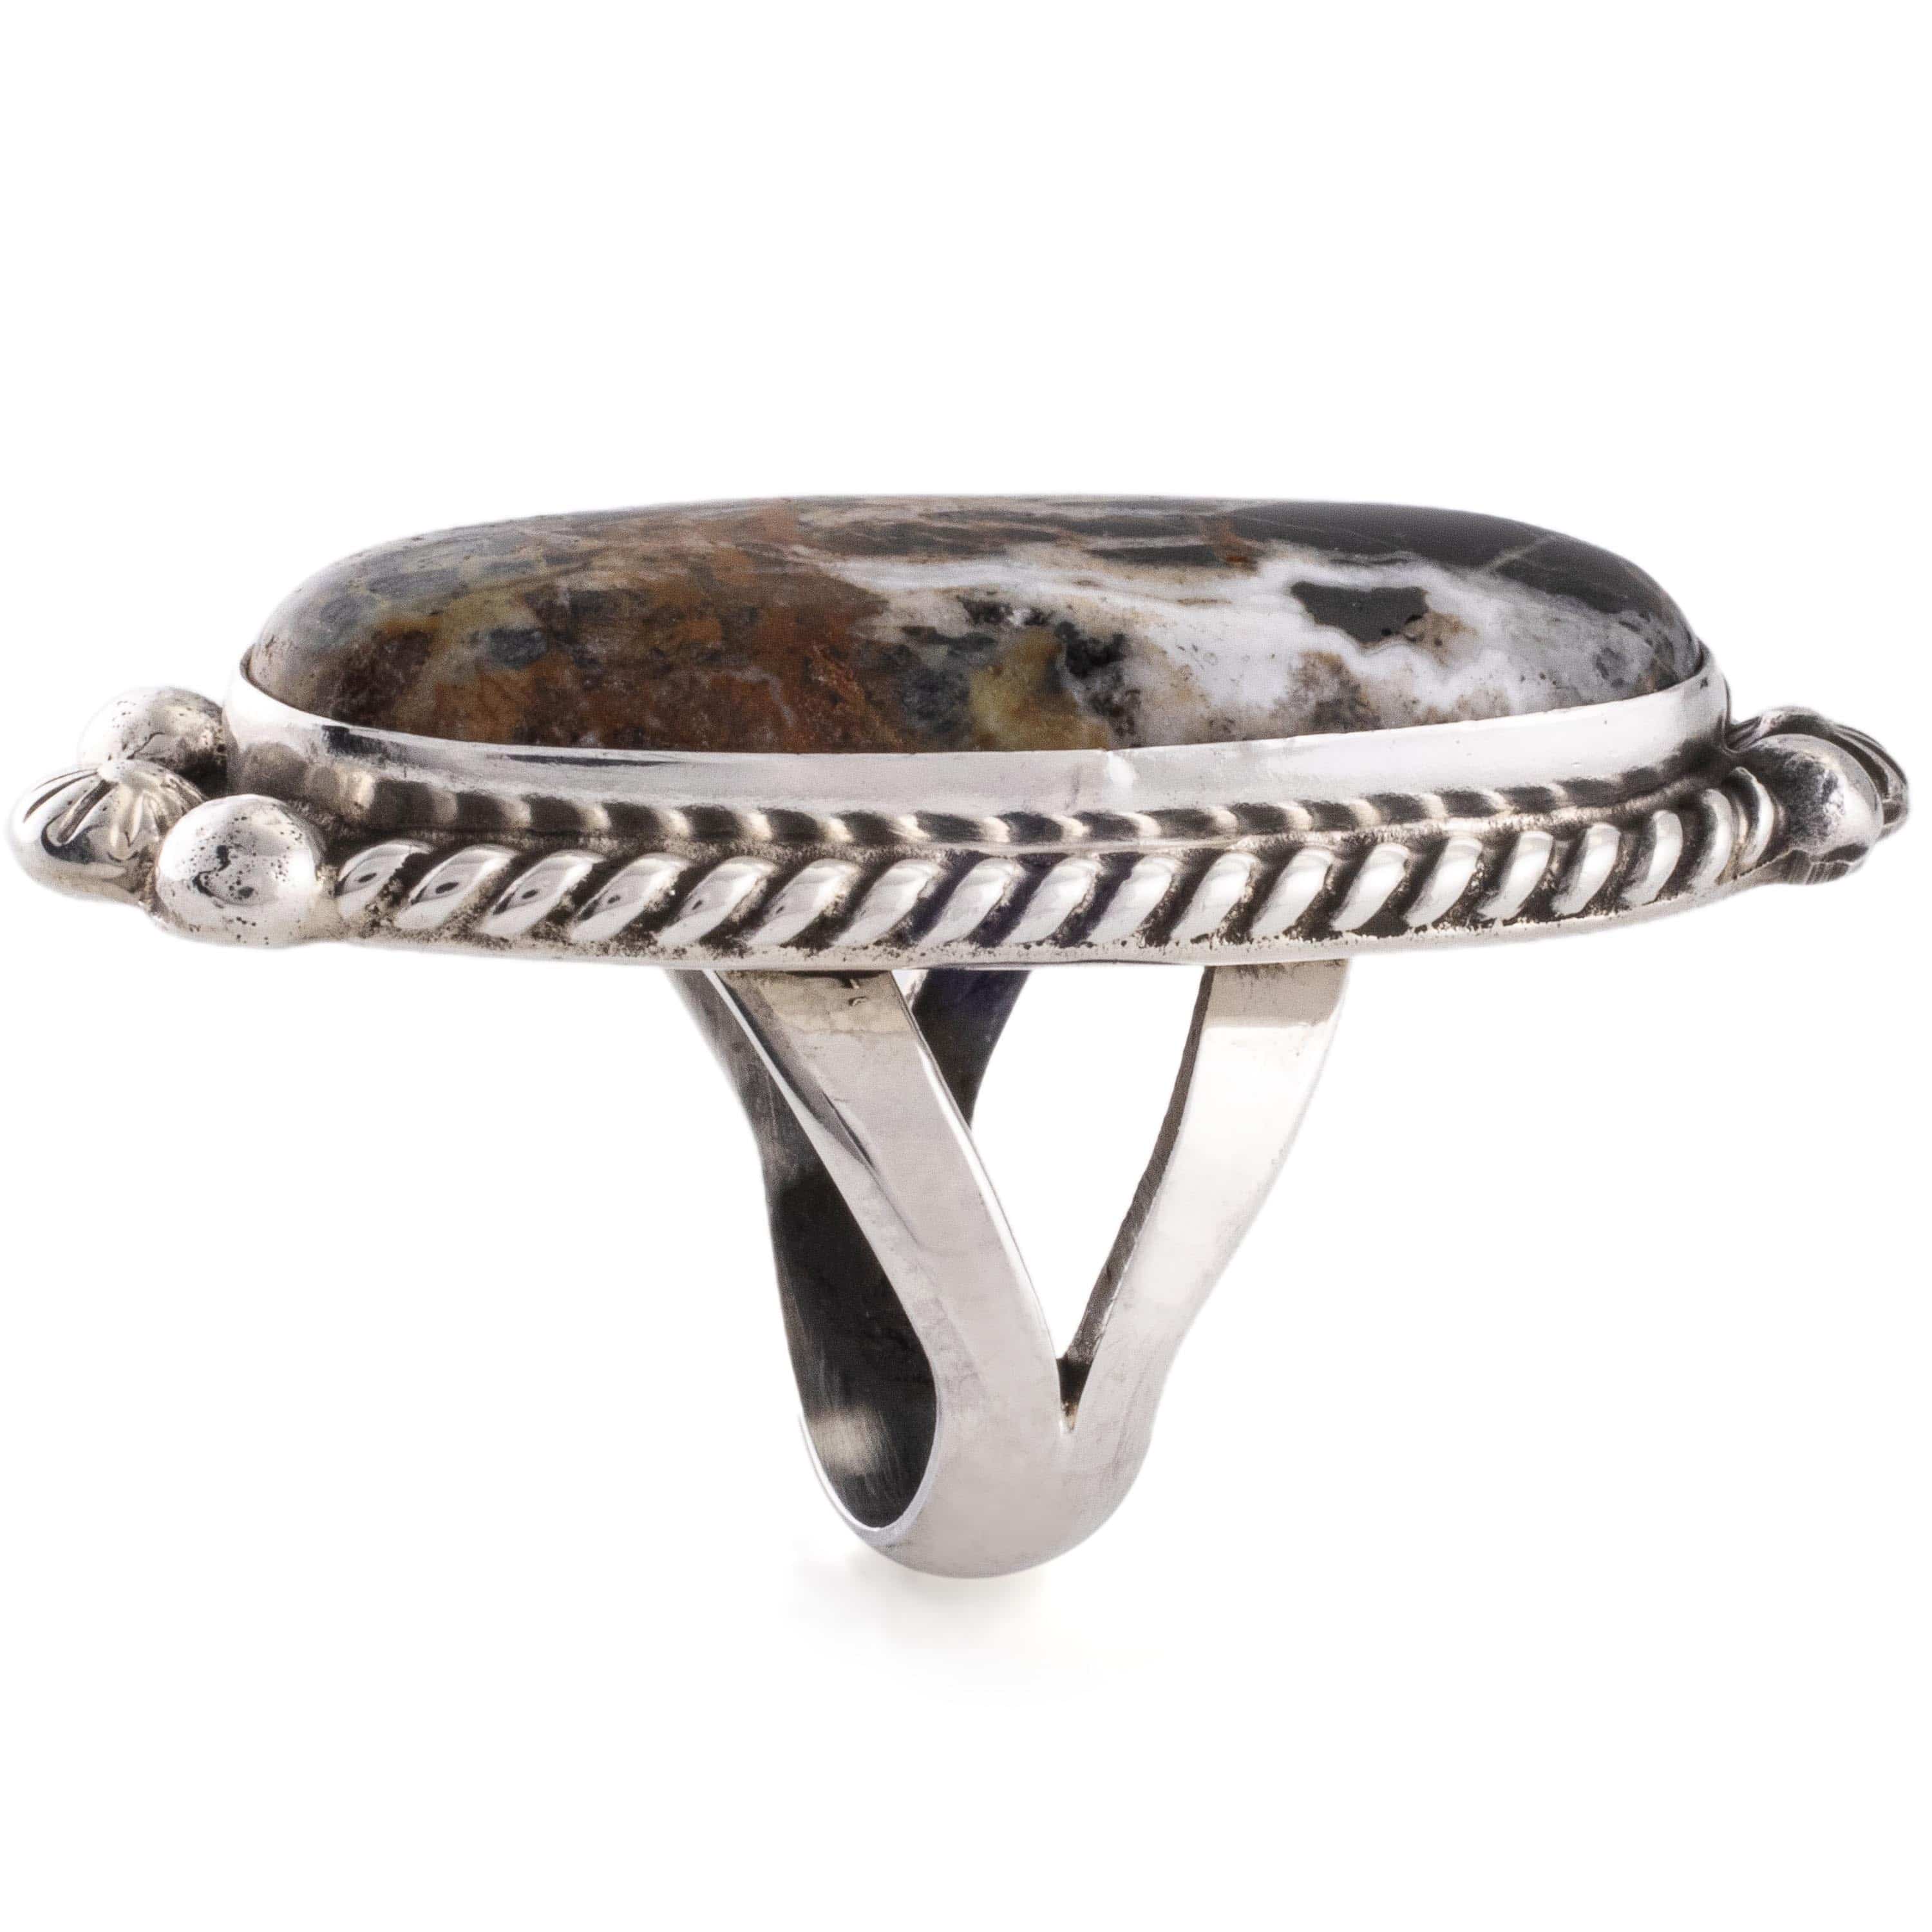 Kalifano Native American Jewelry 8 Eddie Secatero White Buffalo USA Native American Made 925 Sterling Silver Ring NAR1000.018.8